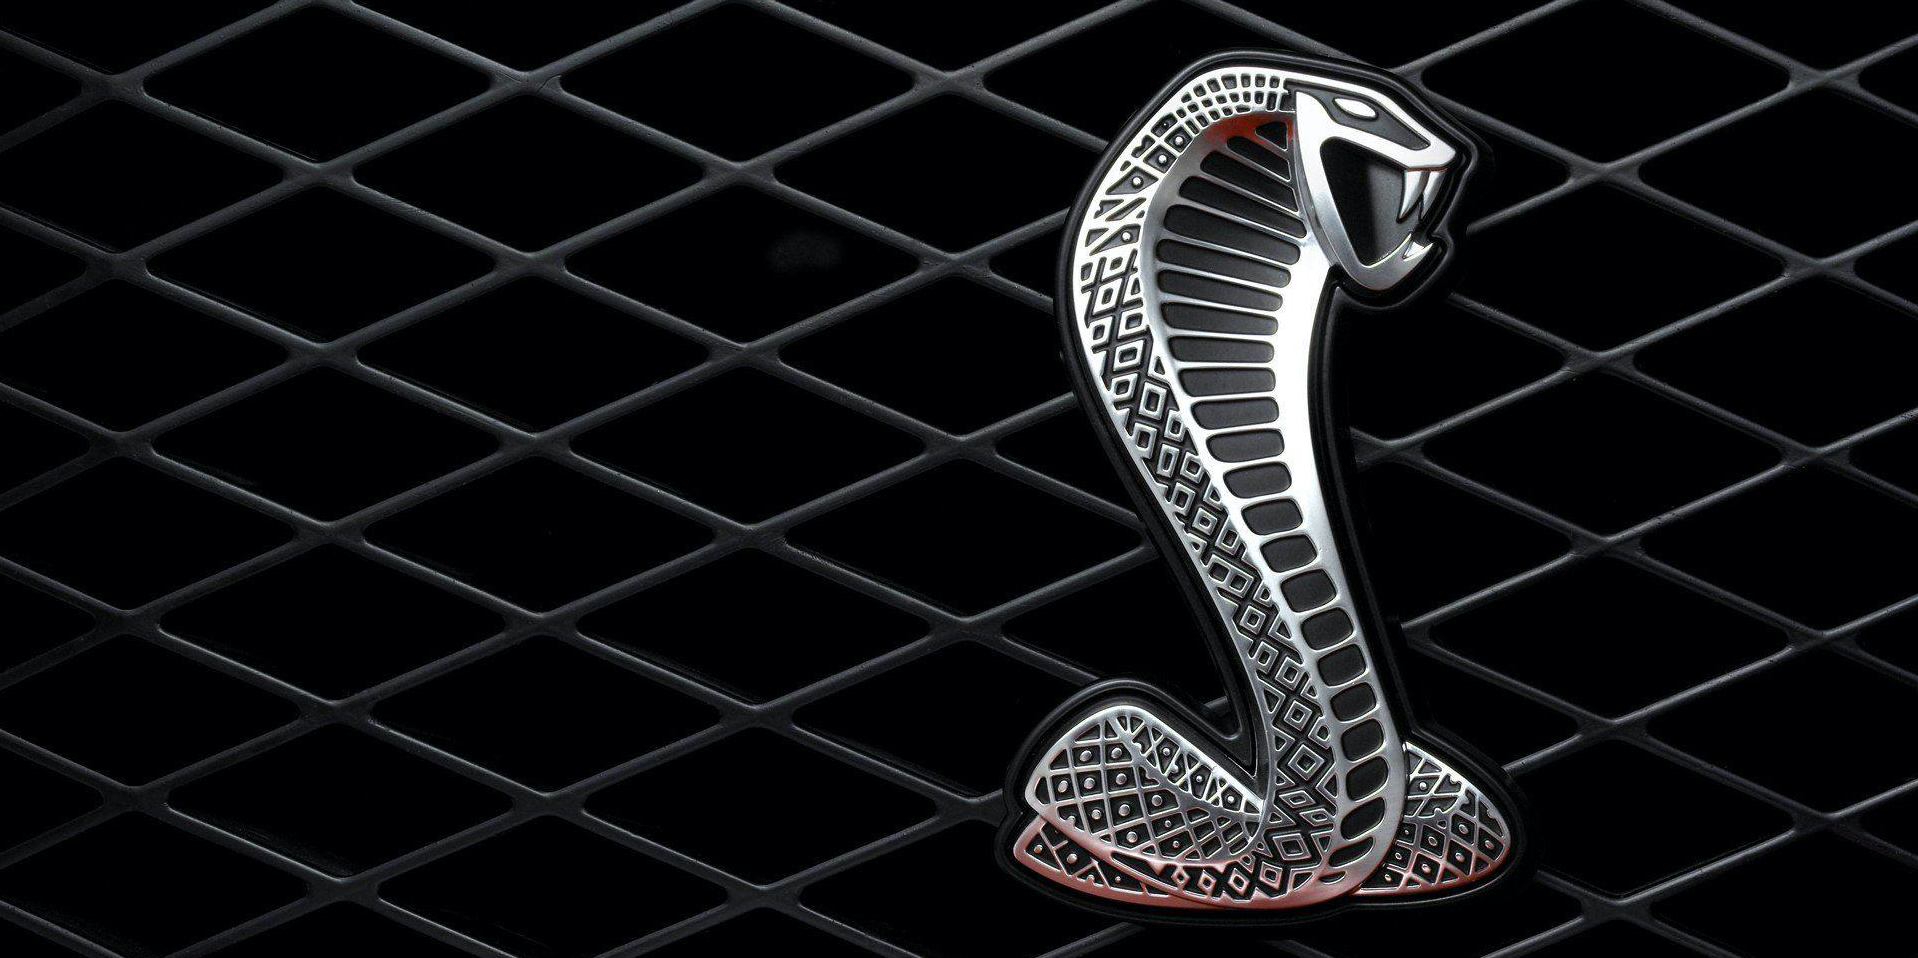 shelby cobra logo on car